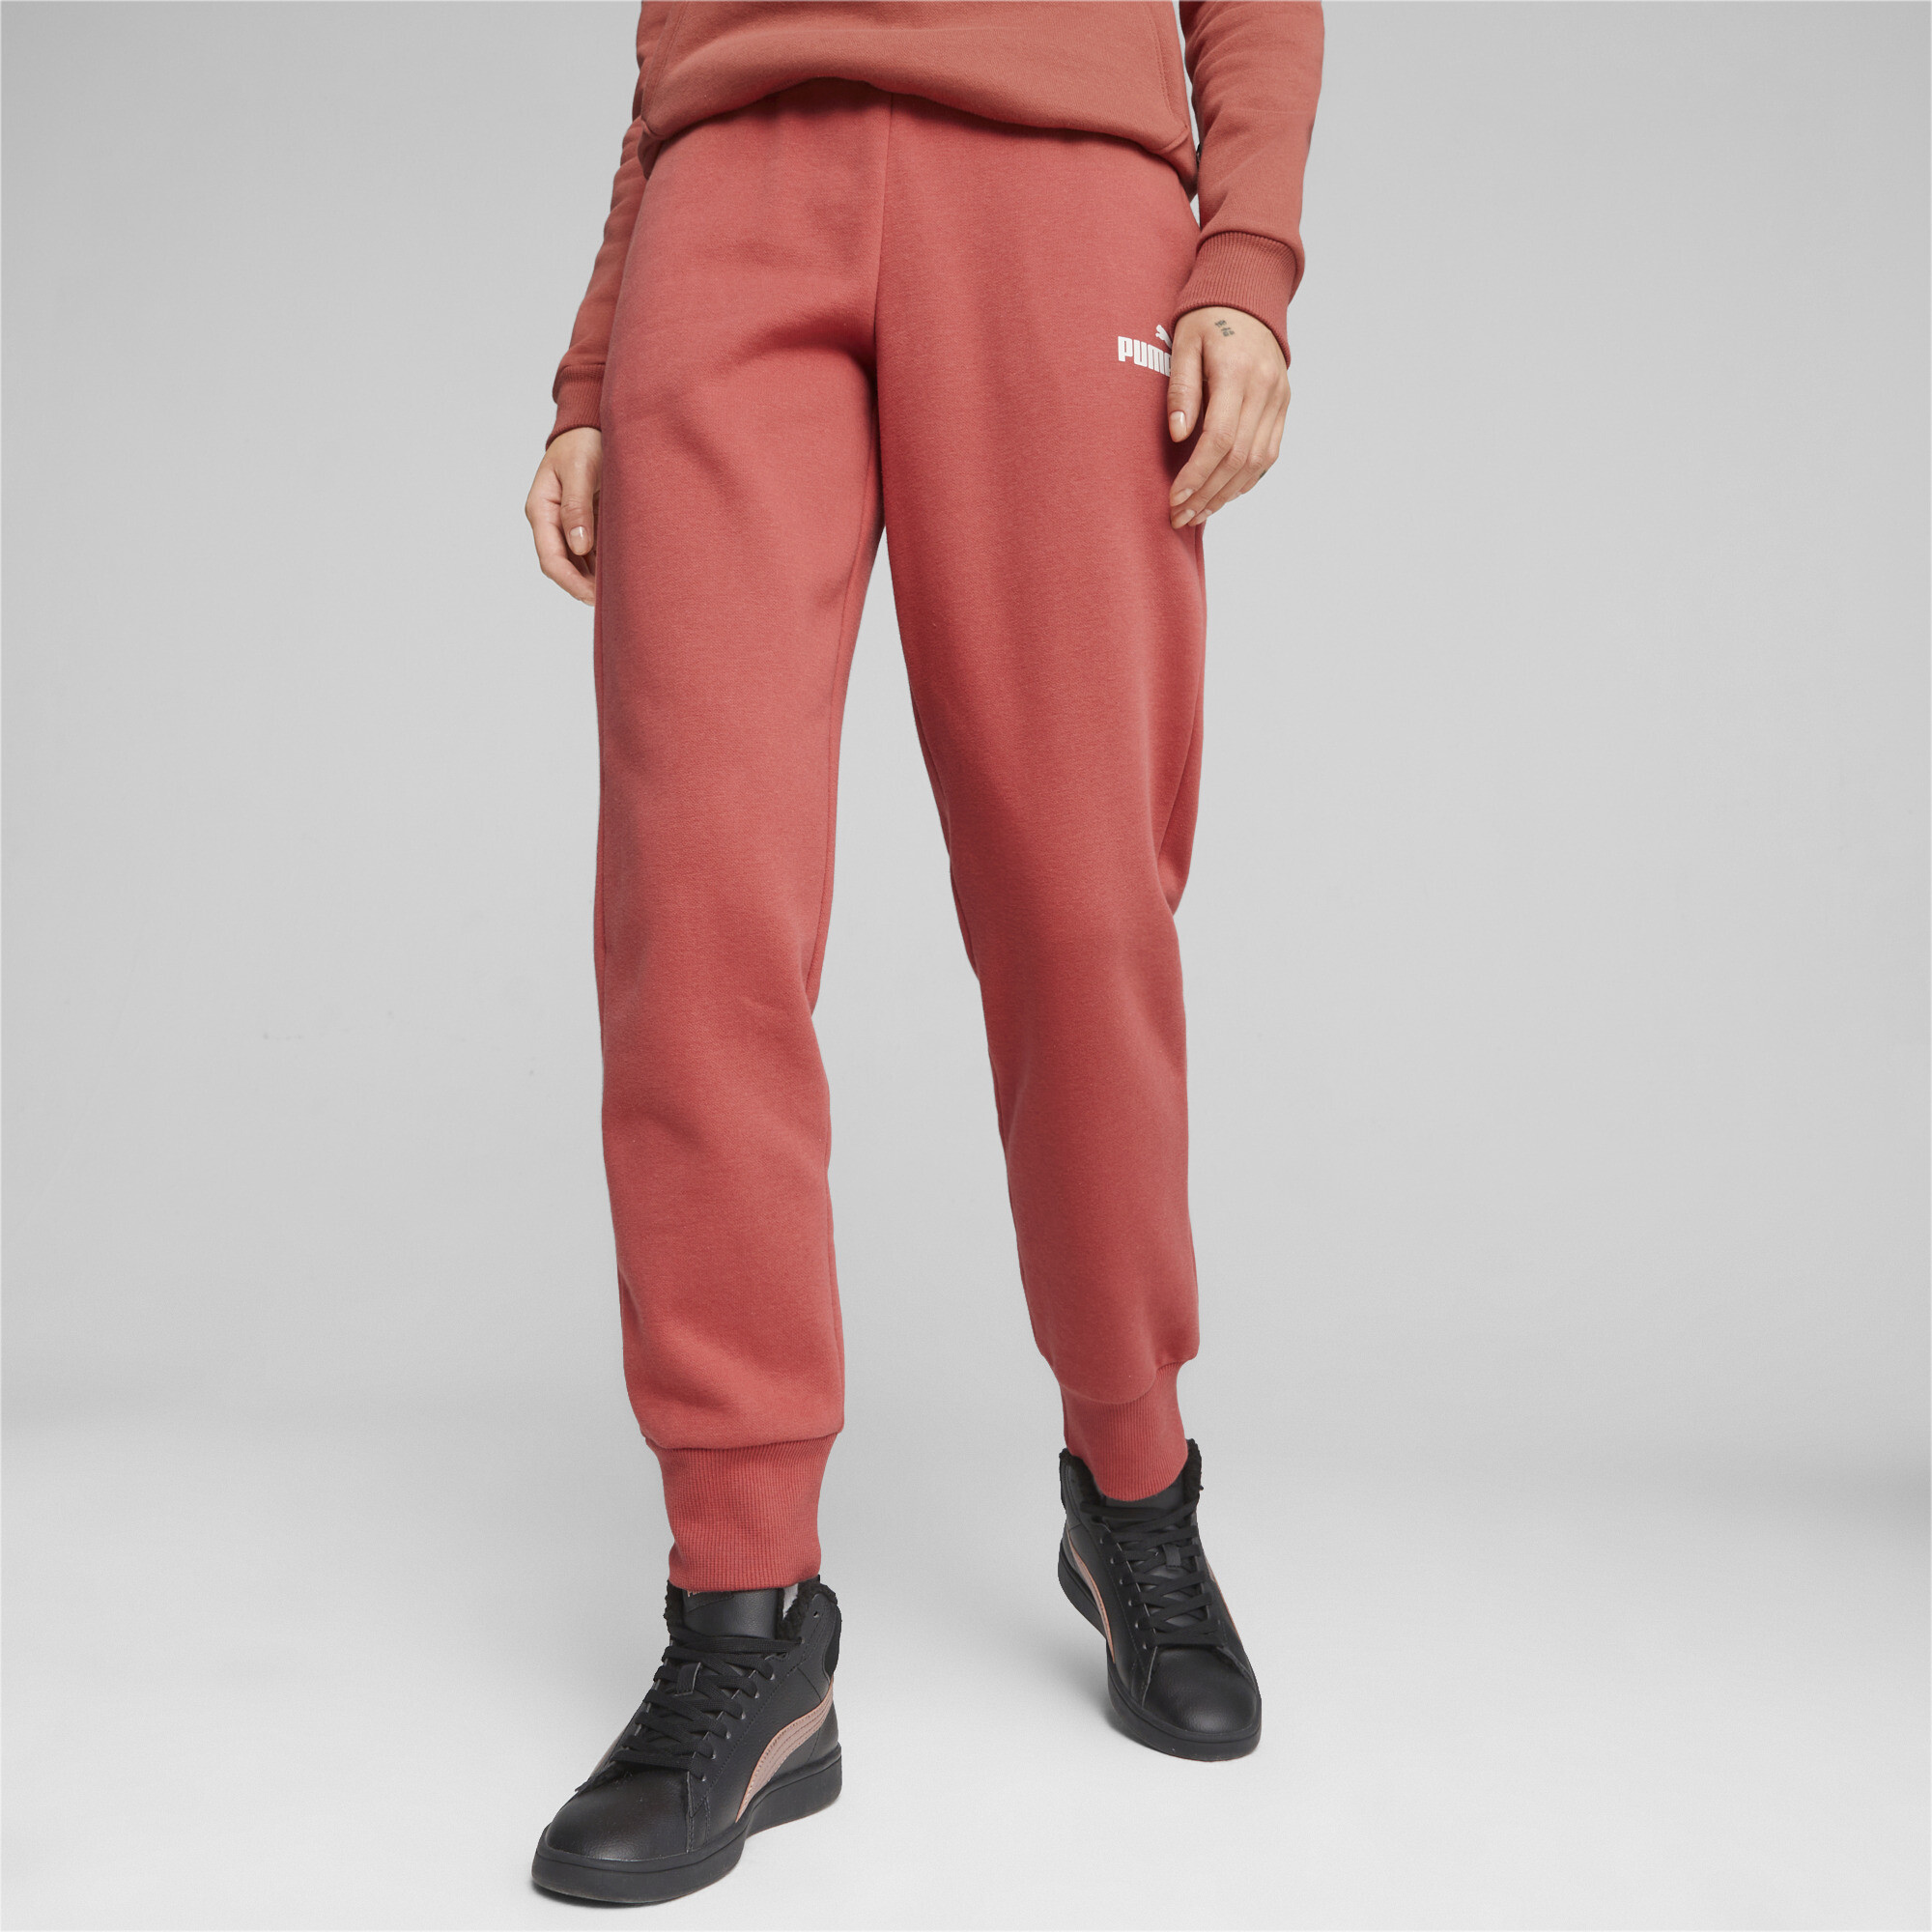 Women's Puma Essentials's Sweatpants, Red, Size XXS, Clothing